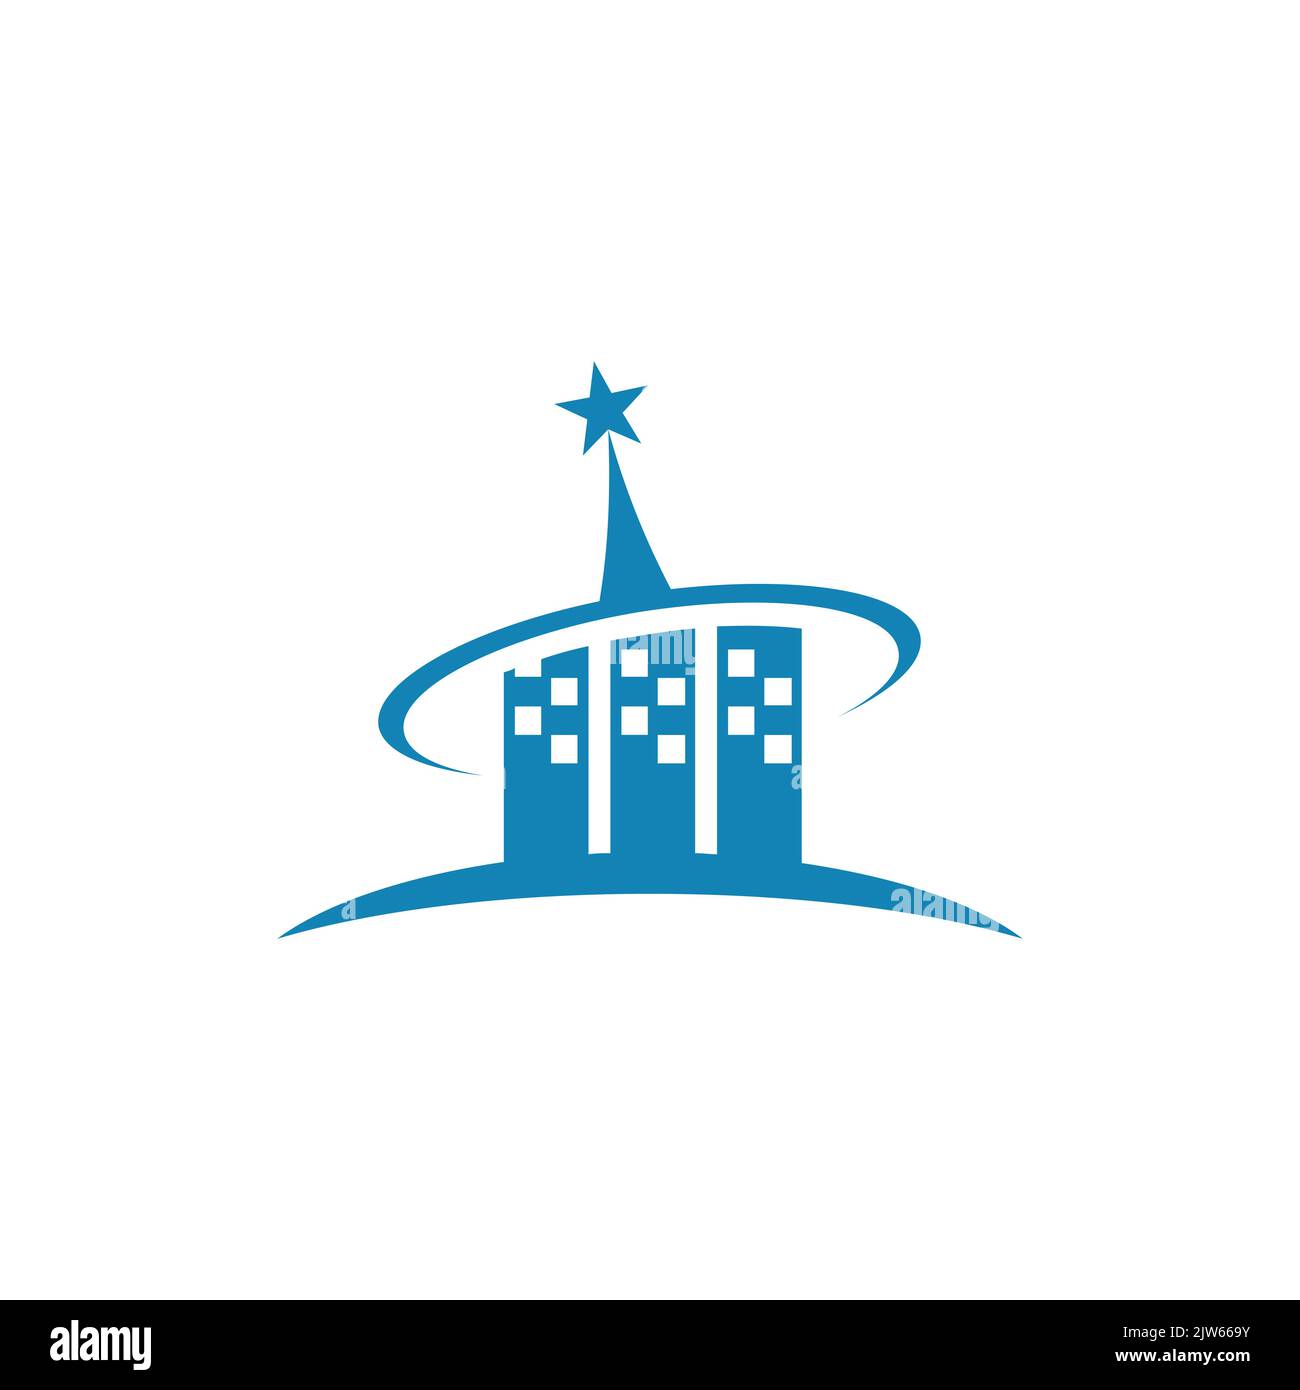 star apartment building logo icon vector graphic design Stock Vector